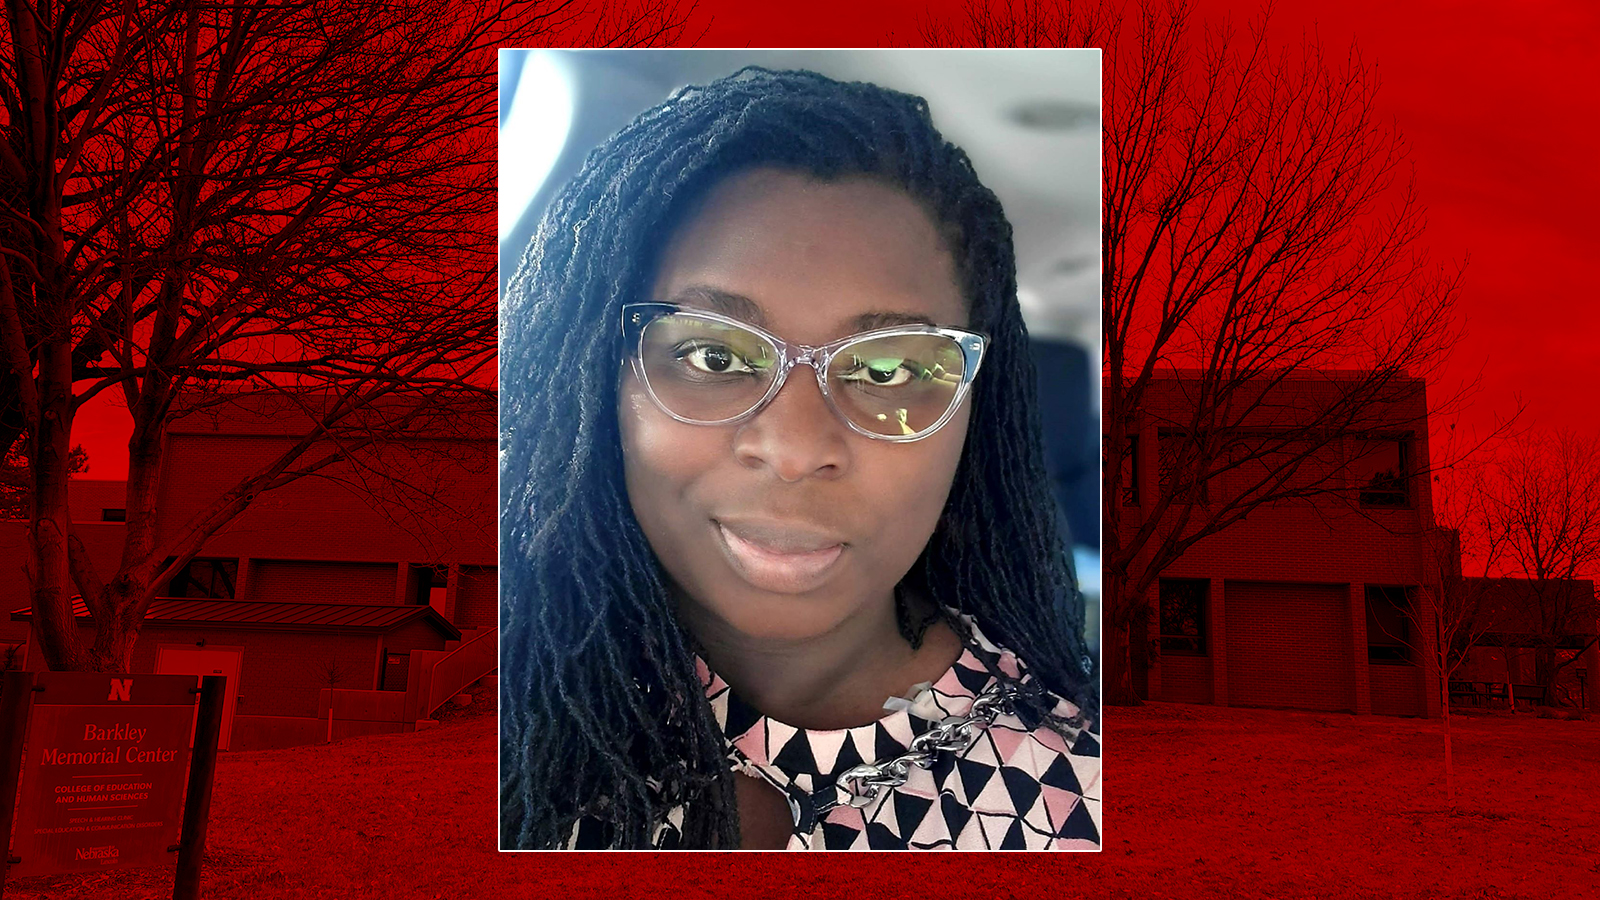 Monique Fenner headshot; Barkley Memorial Center photo with red overlay behind